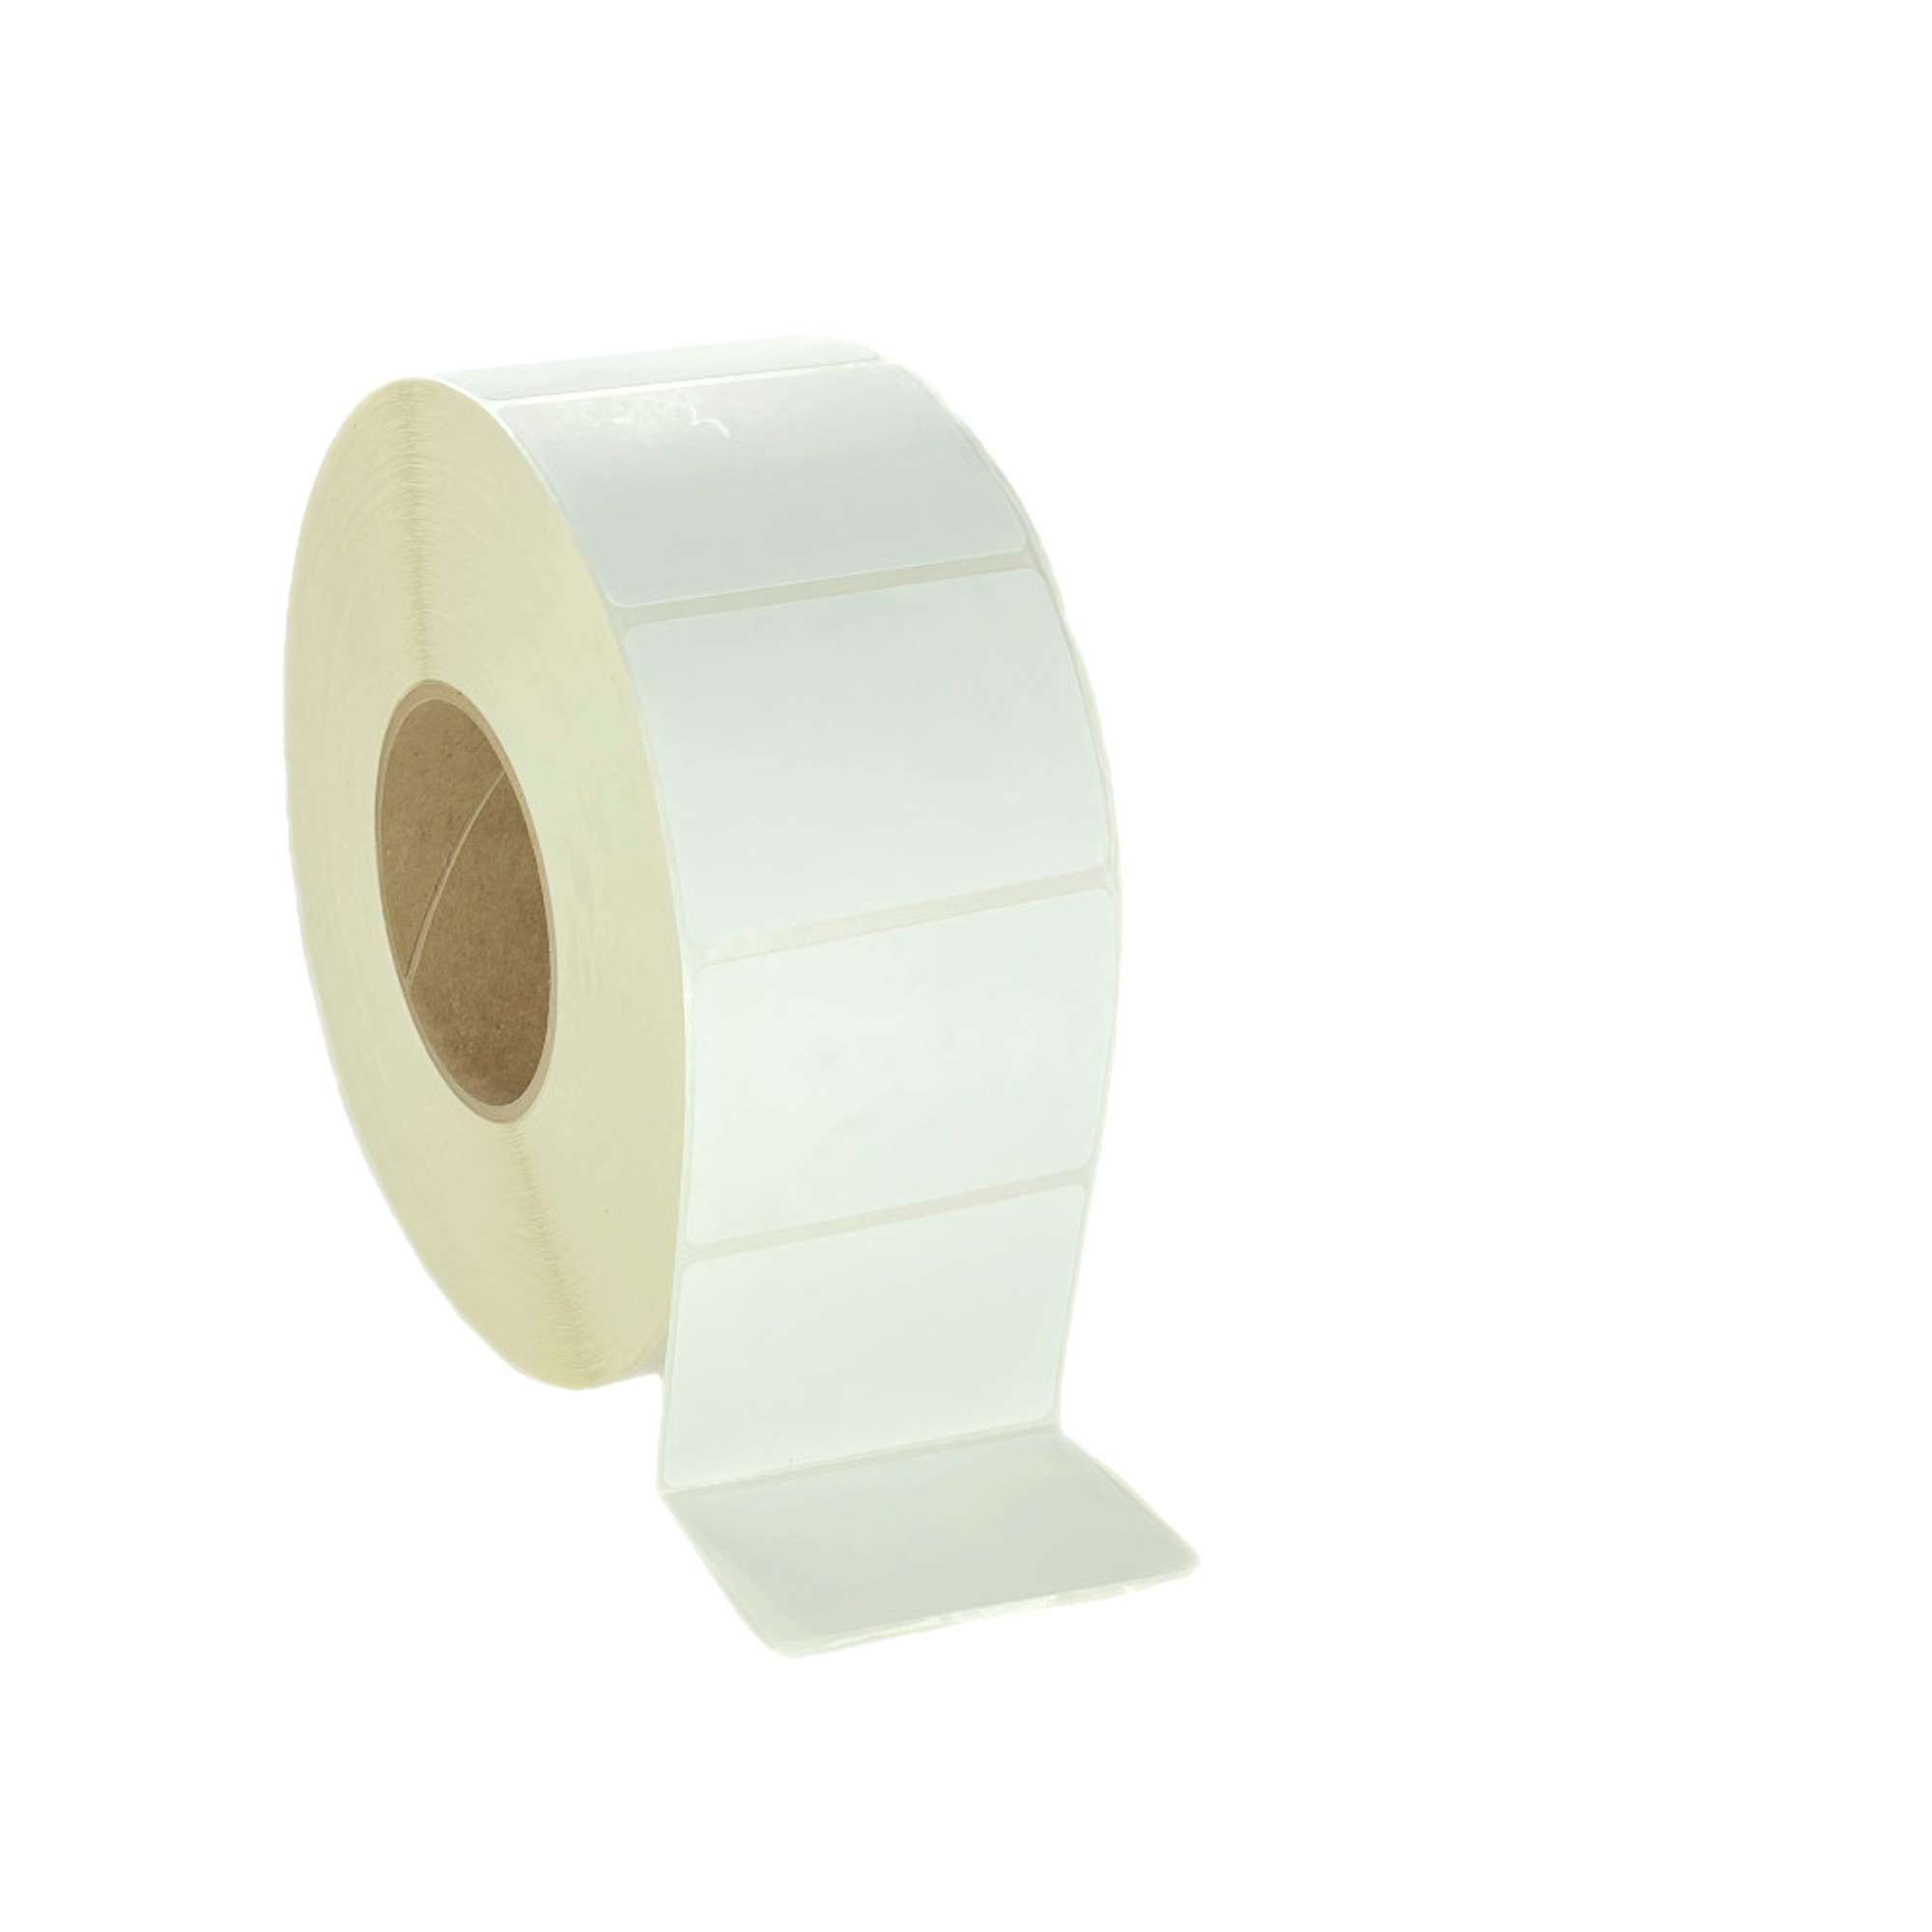 Thermal Transfer Paper Label - White - 1 1/2 x 1 $6.86 Per Roll